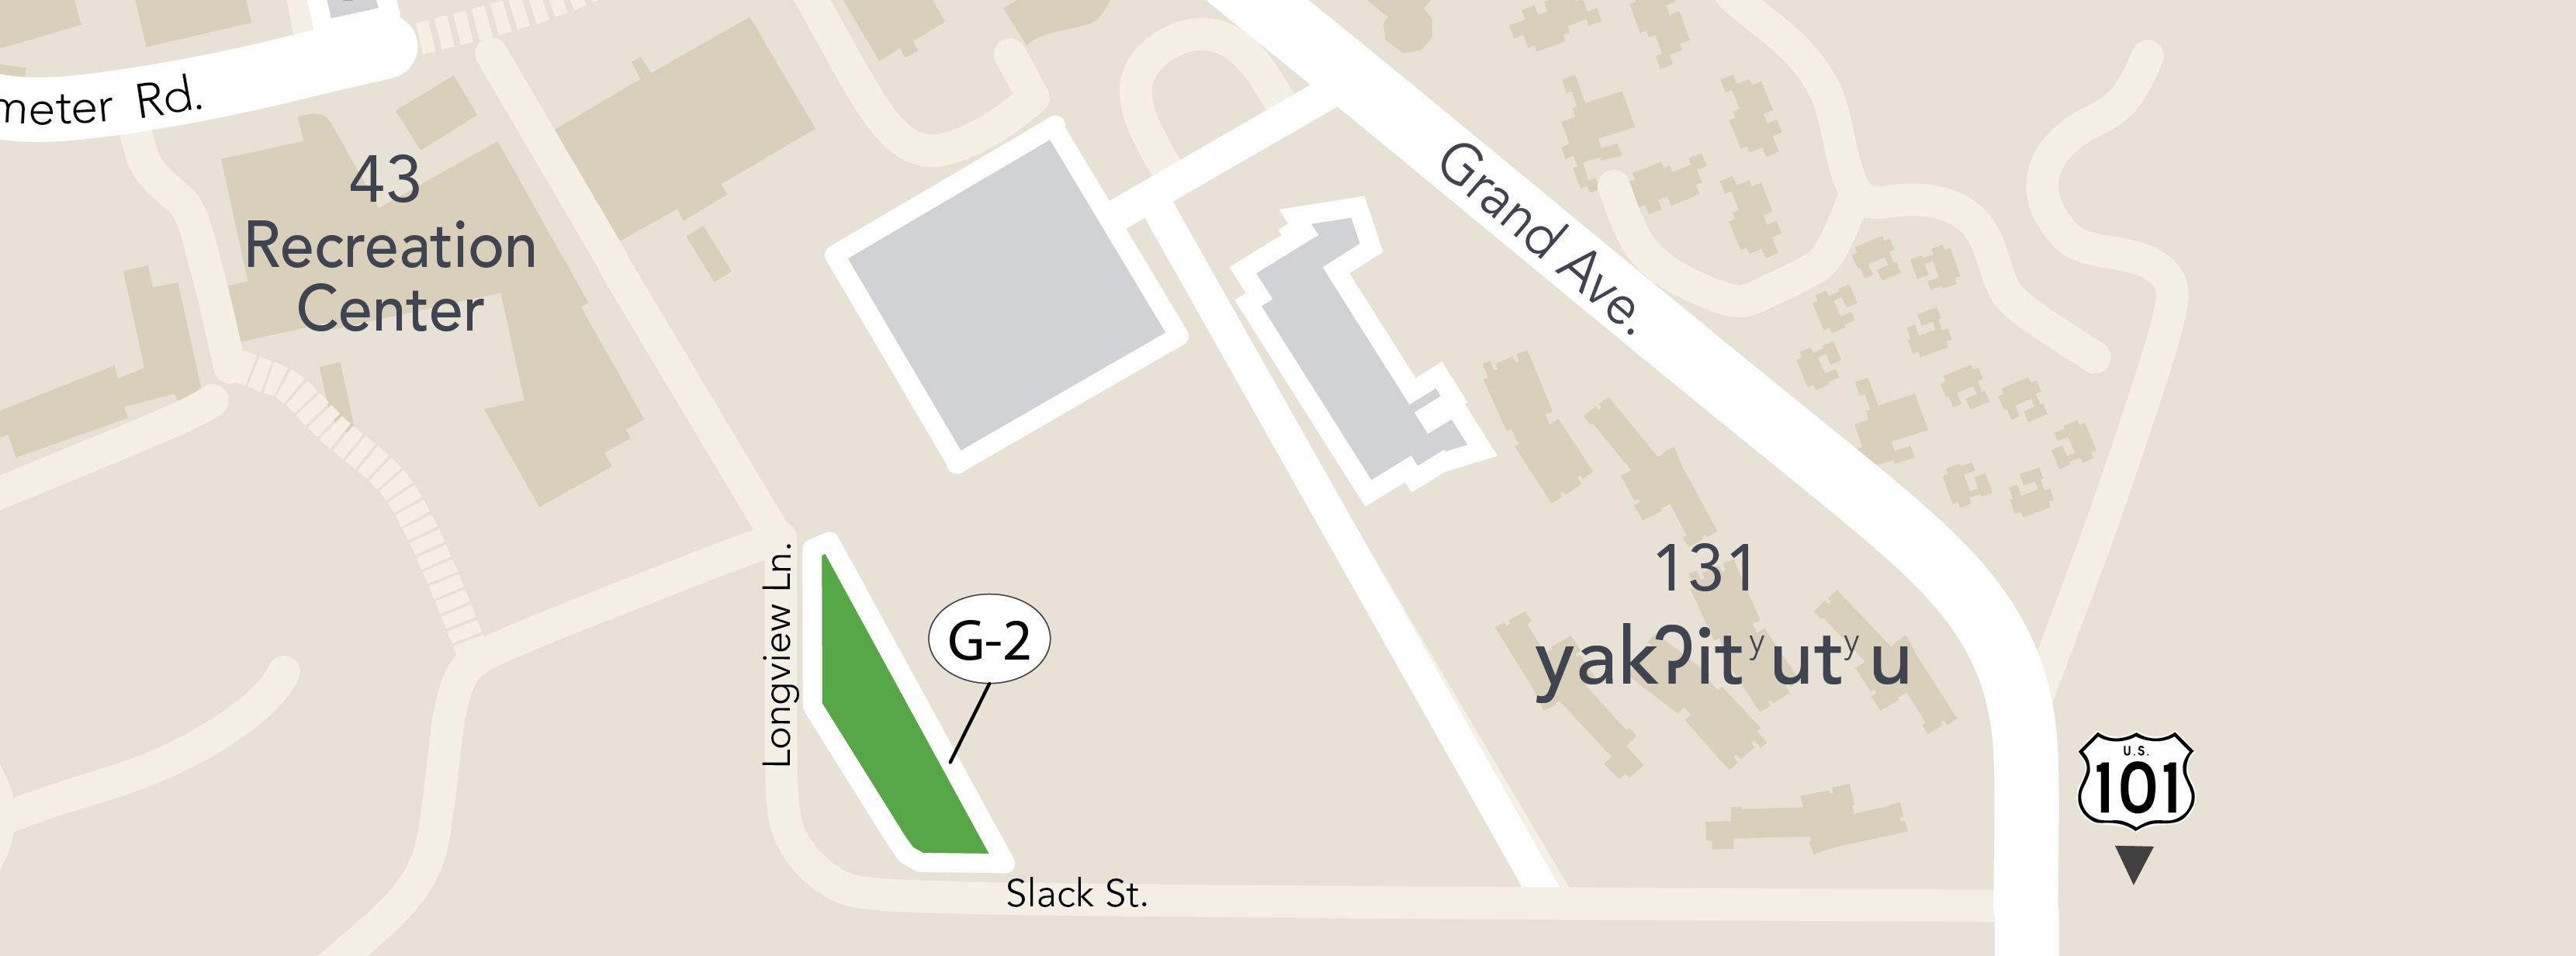 parking Lot G2 map